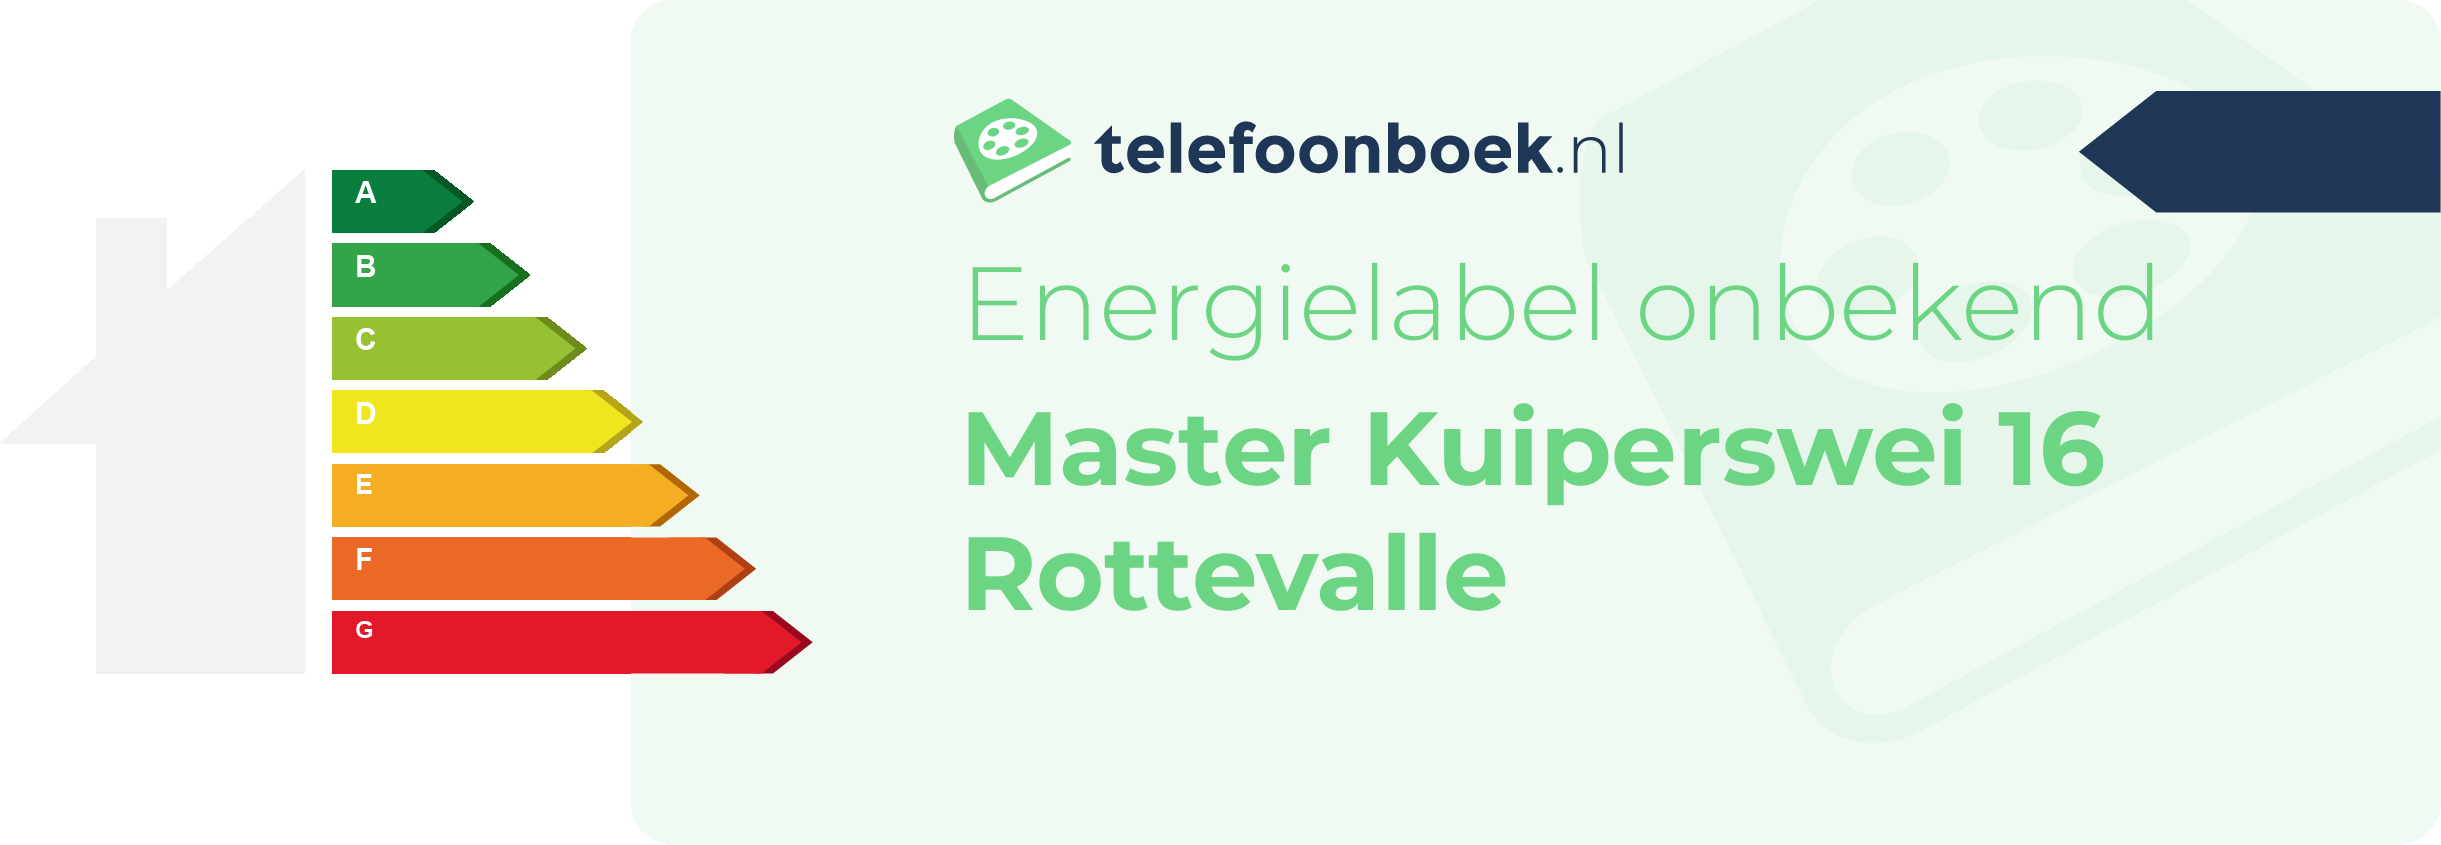 Energielabel Master Kuiperswei 16 Rottevalle